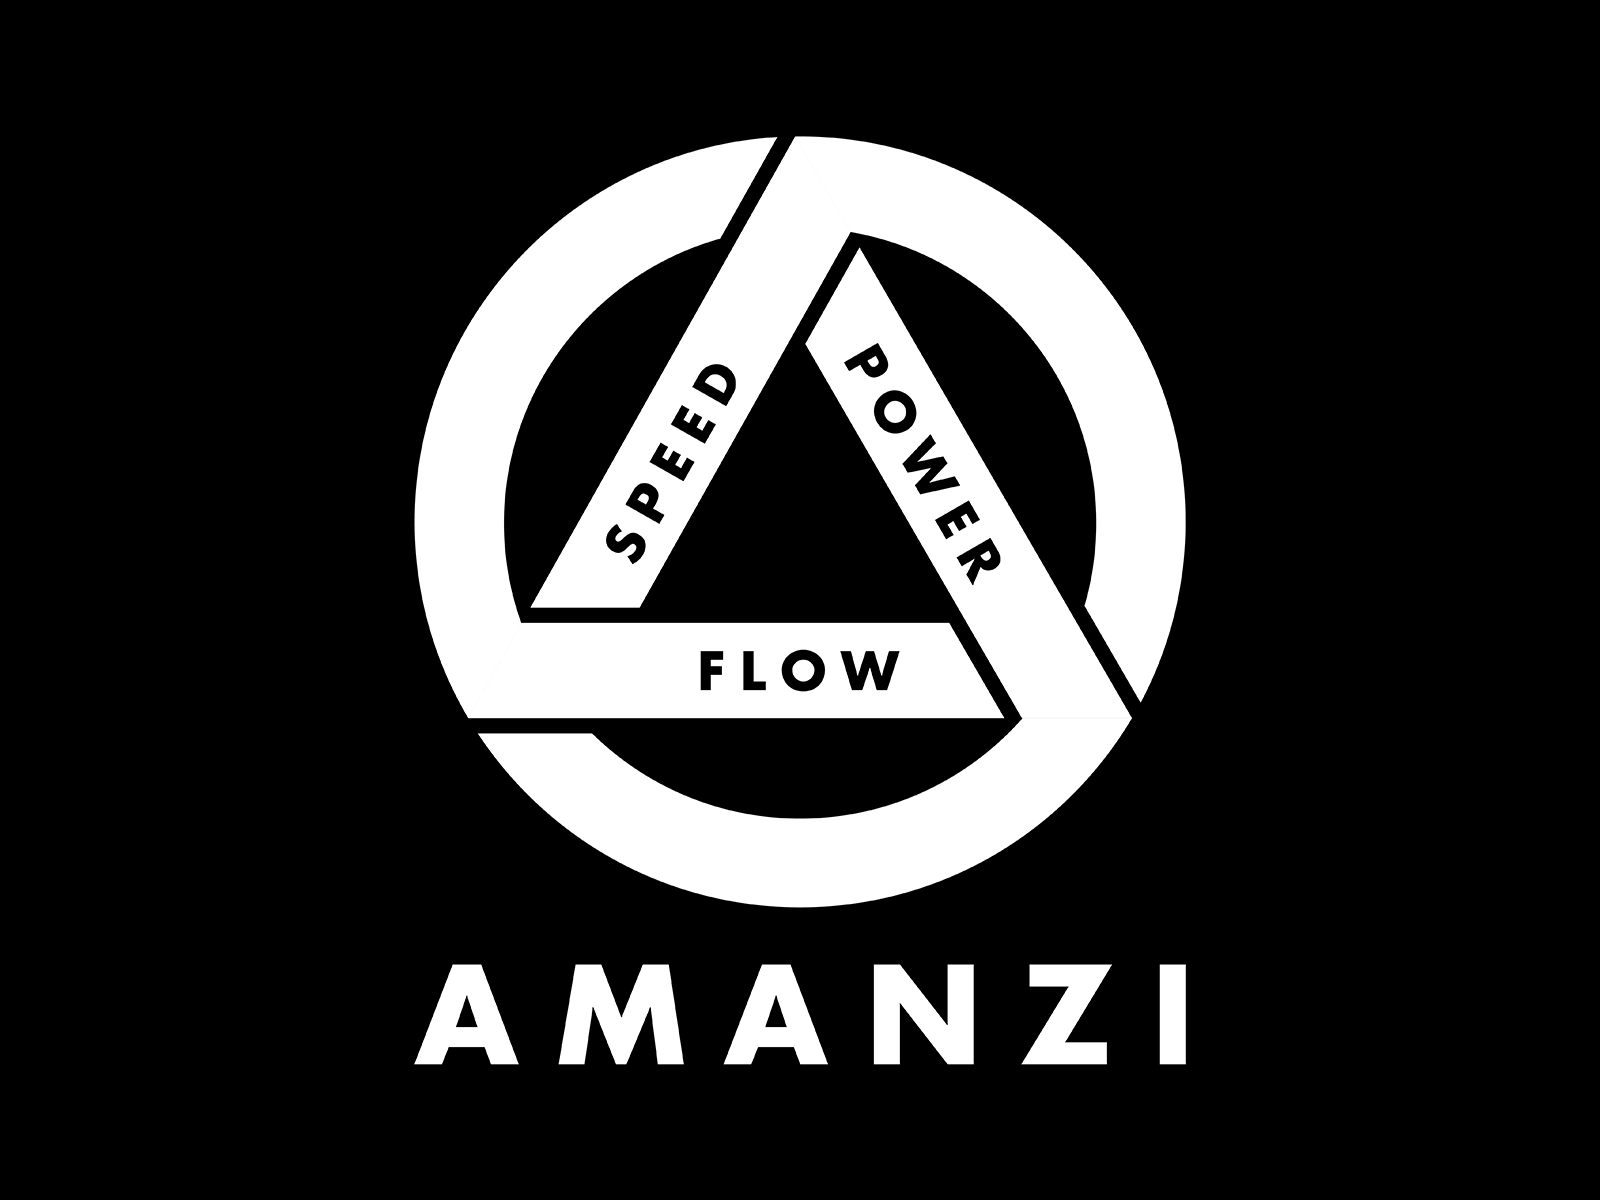 AMANZI (Professional Logo Design) by Abdul Rehman Tahir on Dribbble